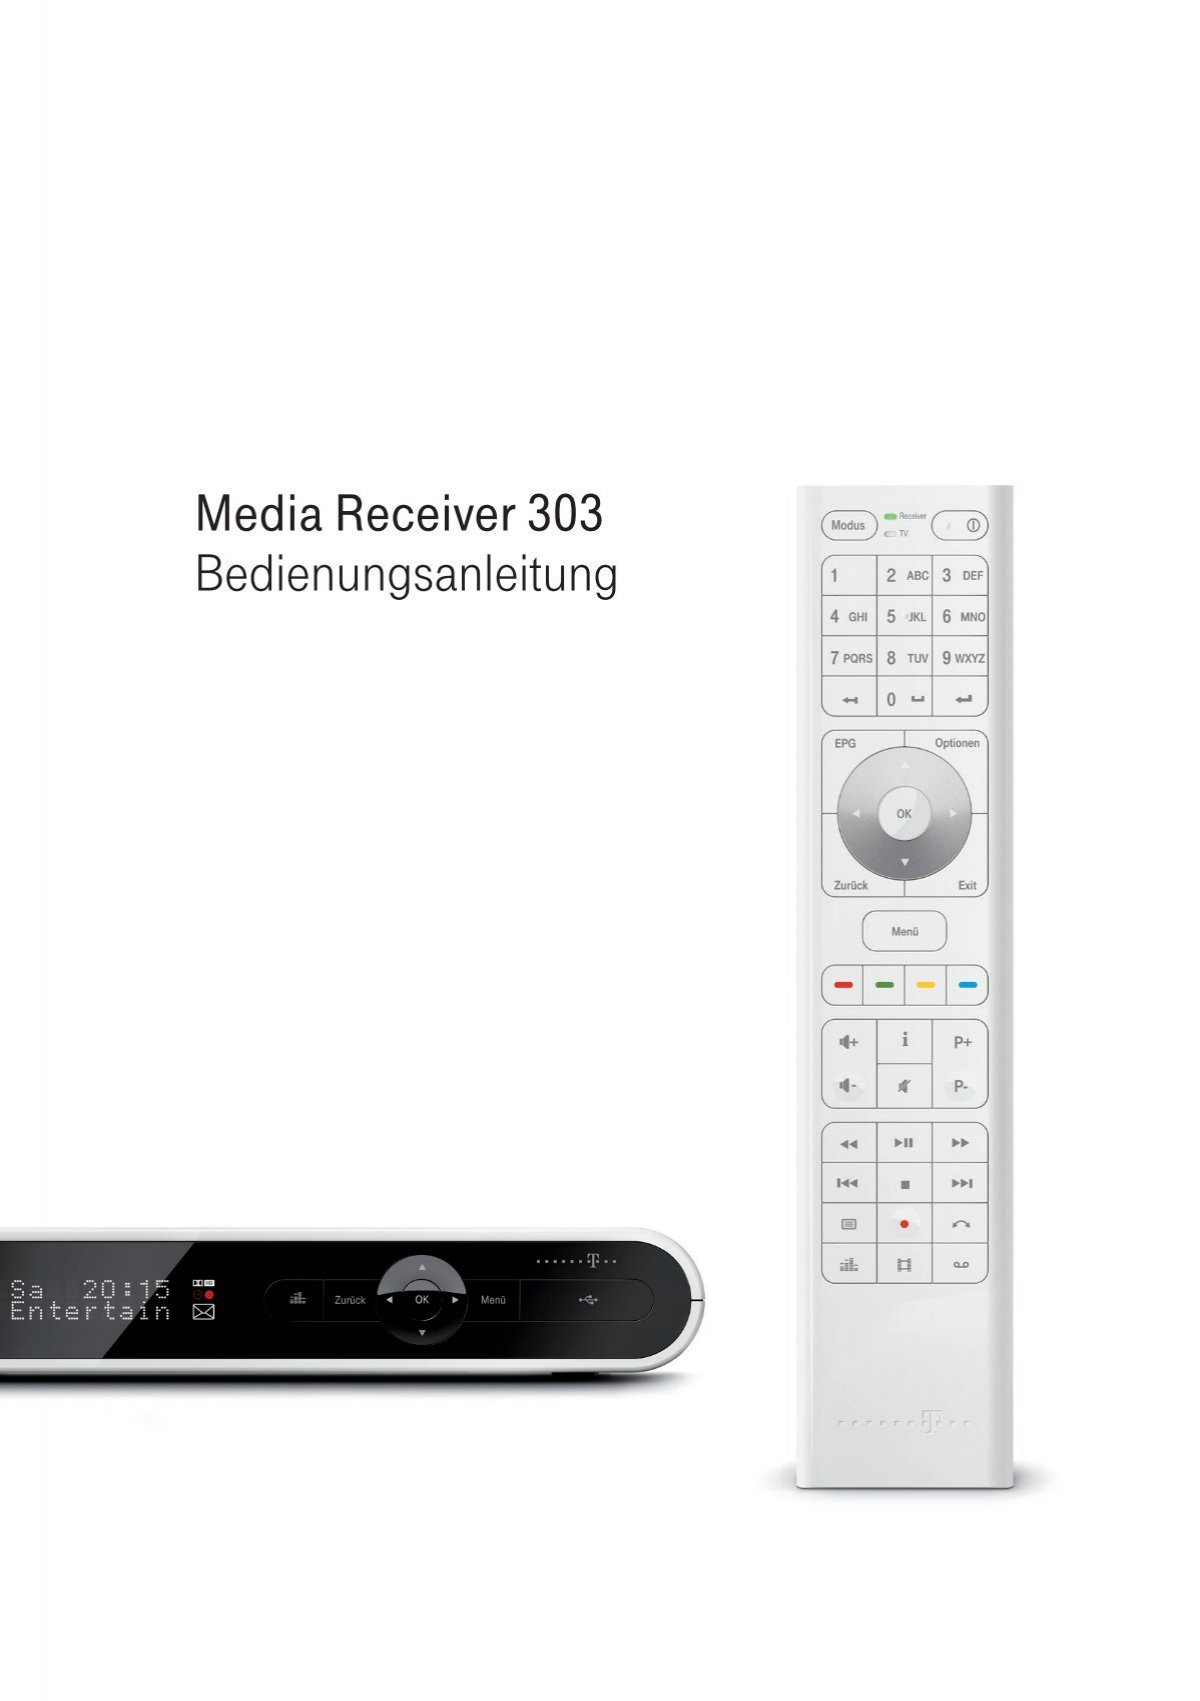 Bedienungsanleitung - Media Receiver 303 A - Telekom